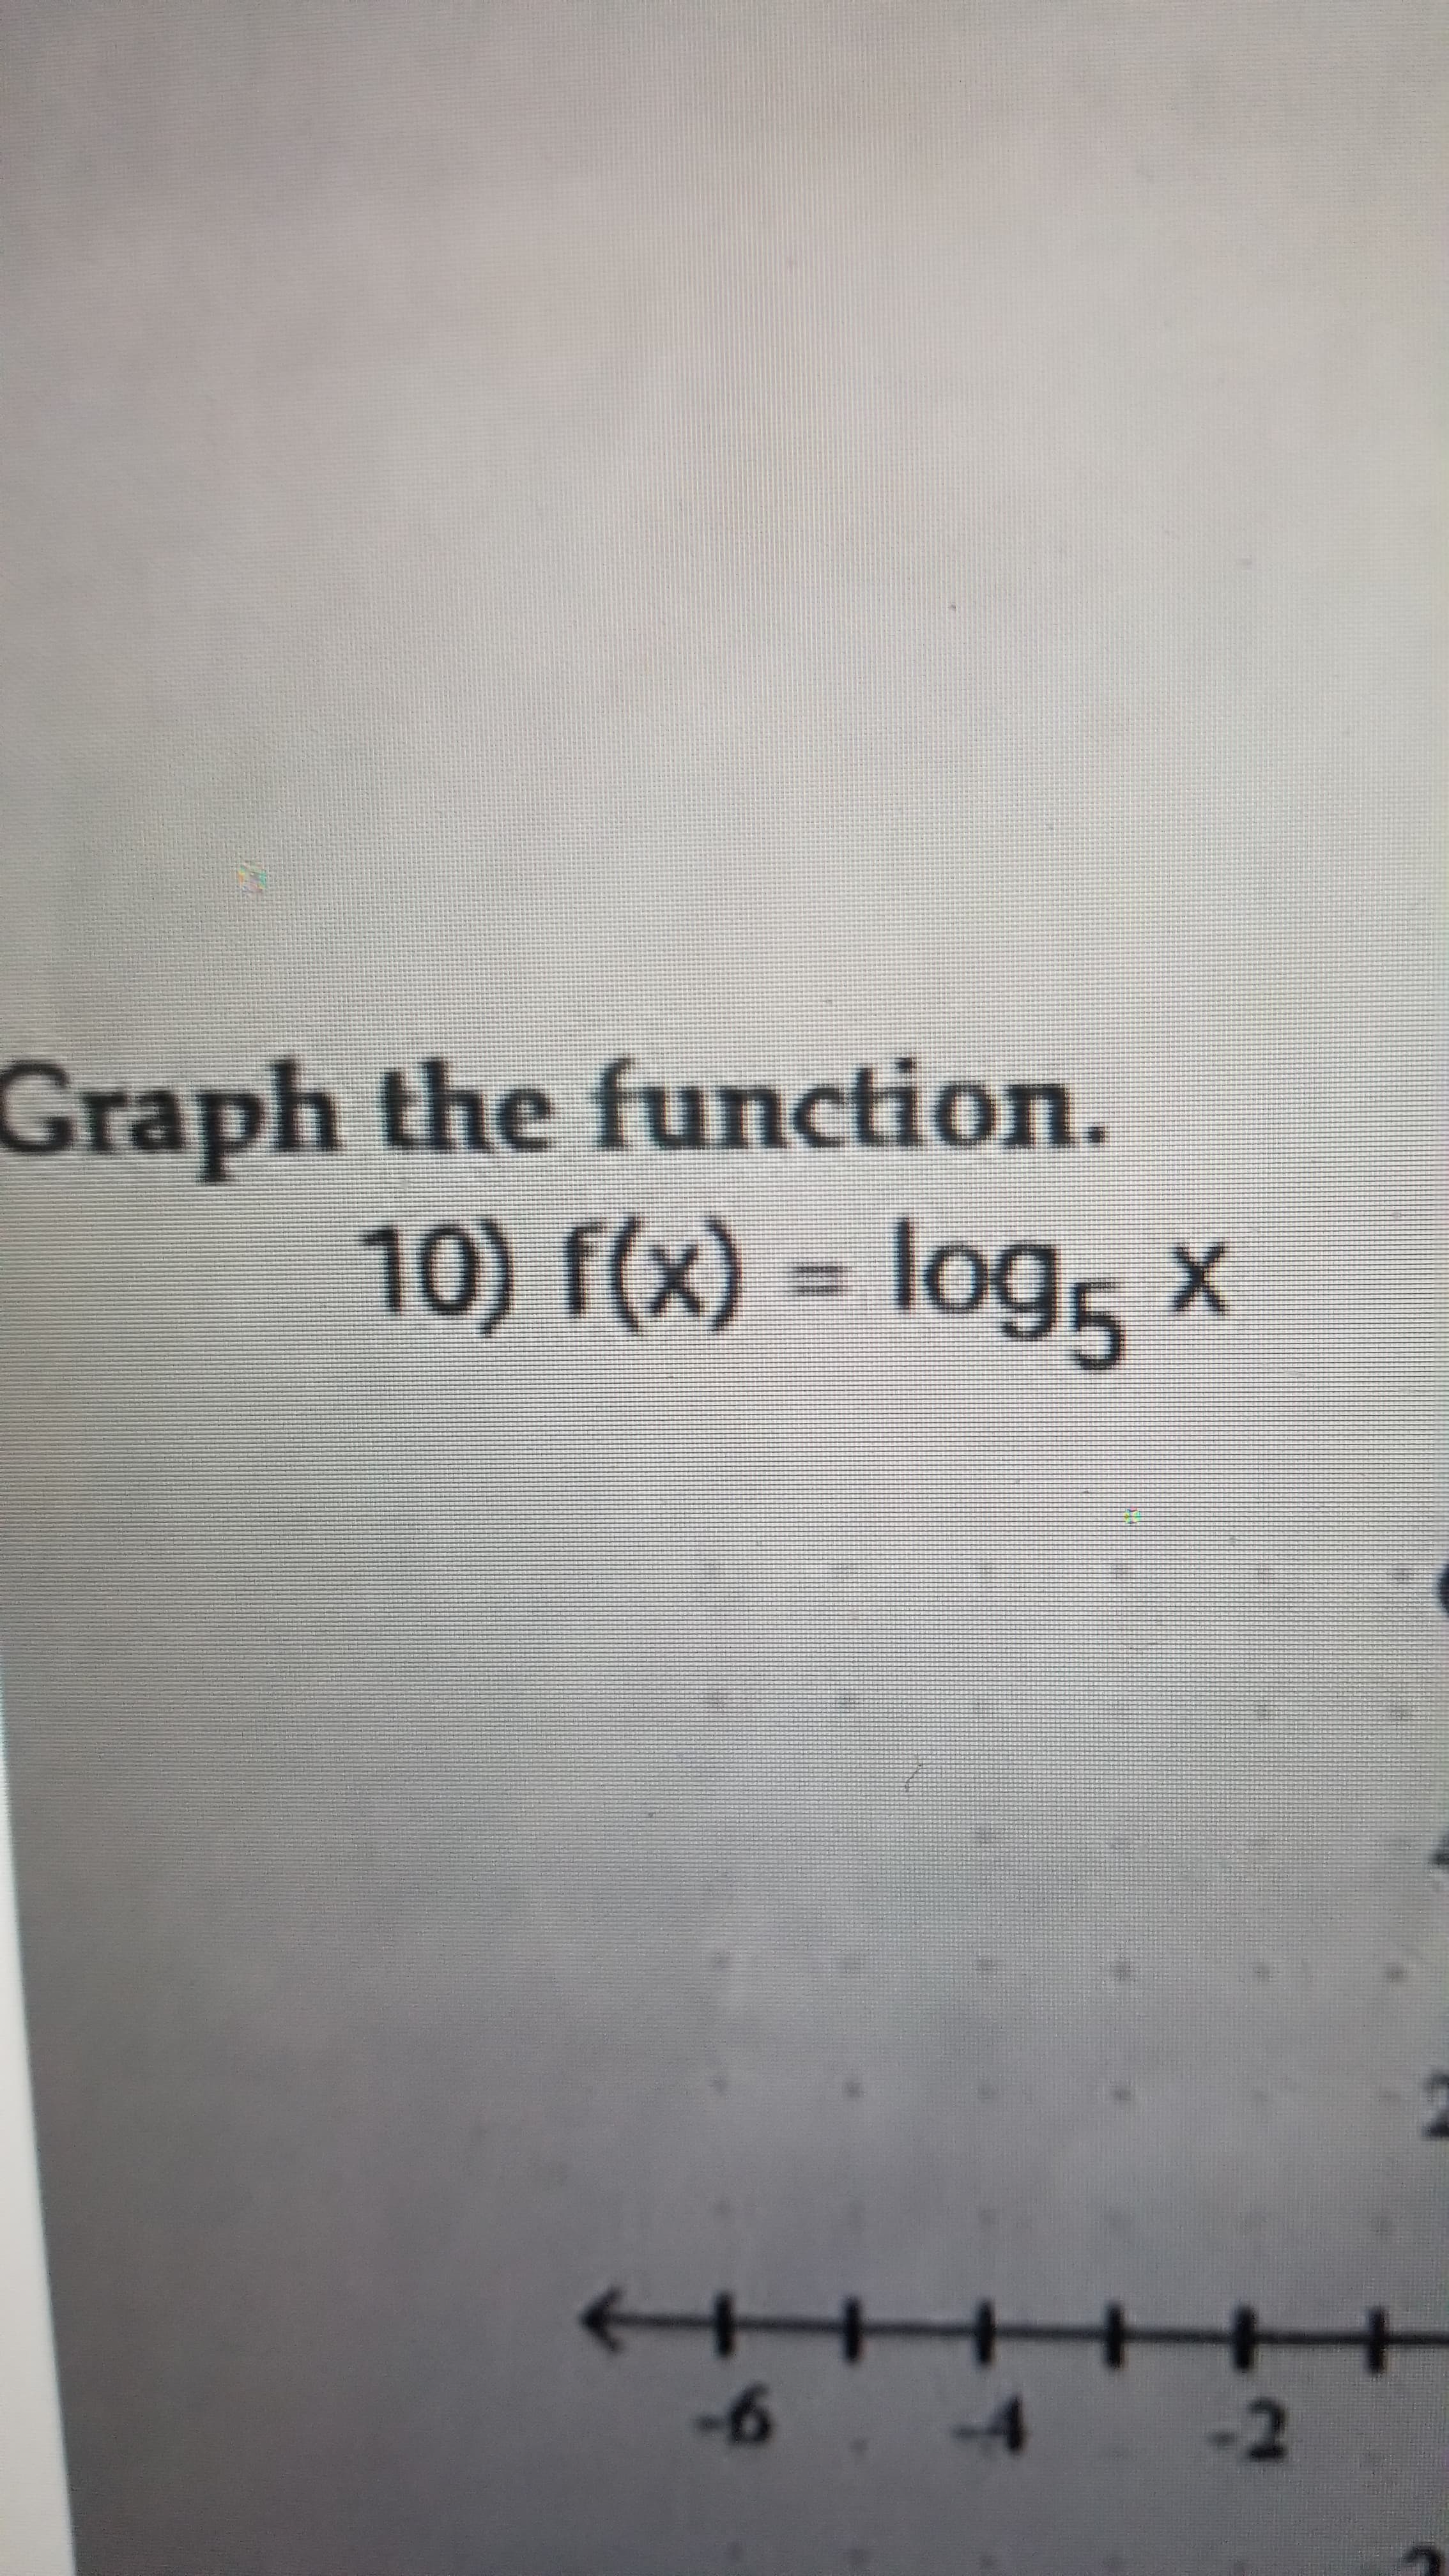 Graph the function.
10) f(x)%3 log5x
-6
-2
